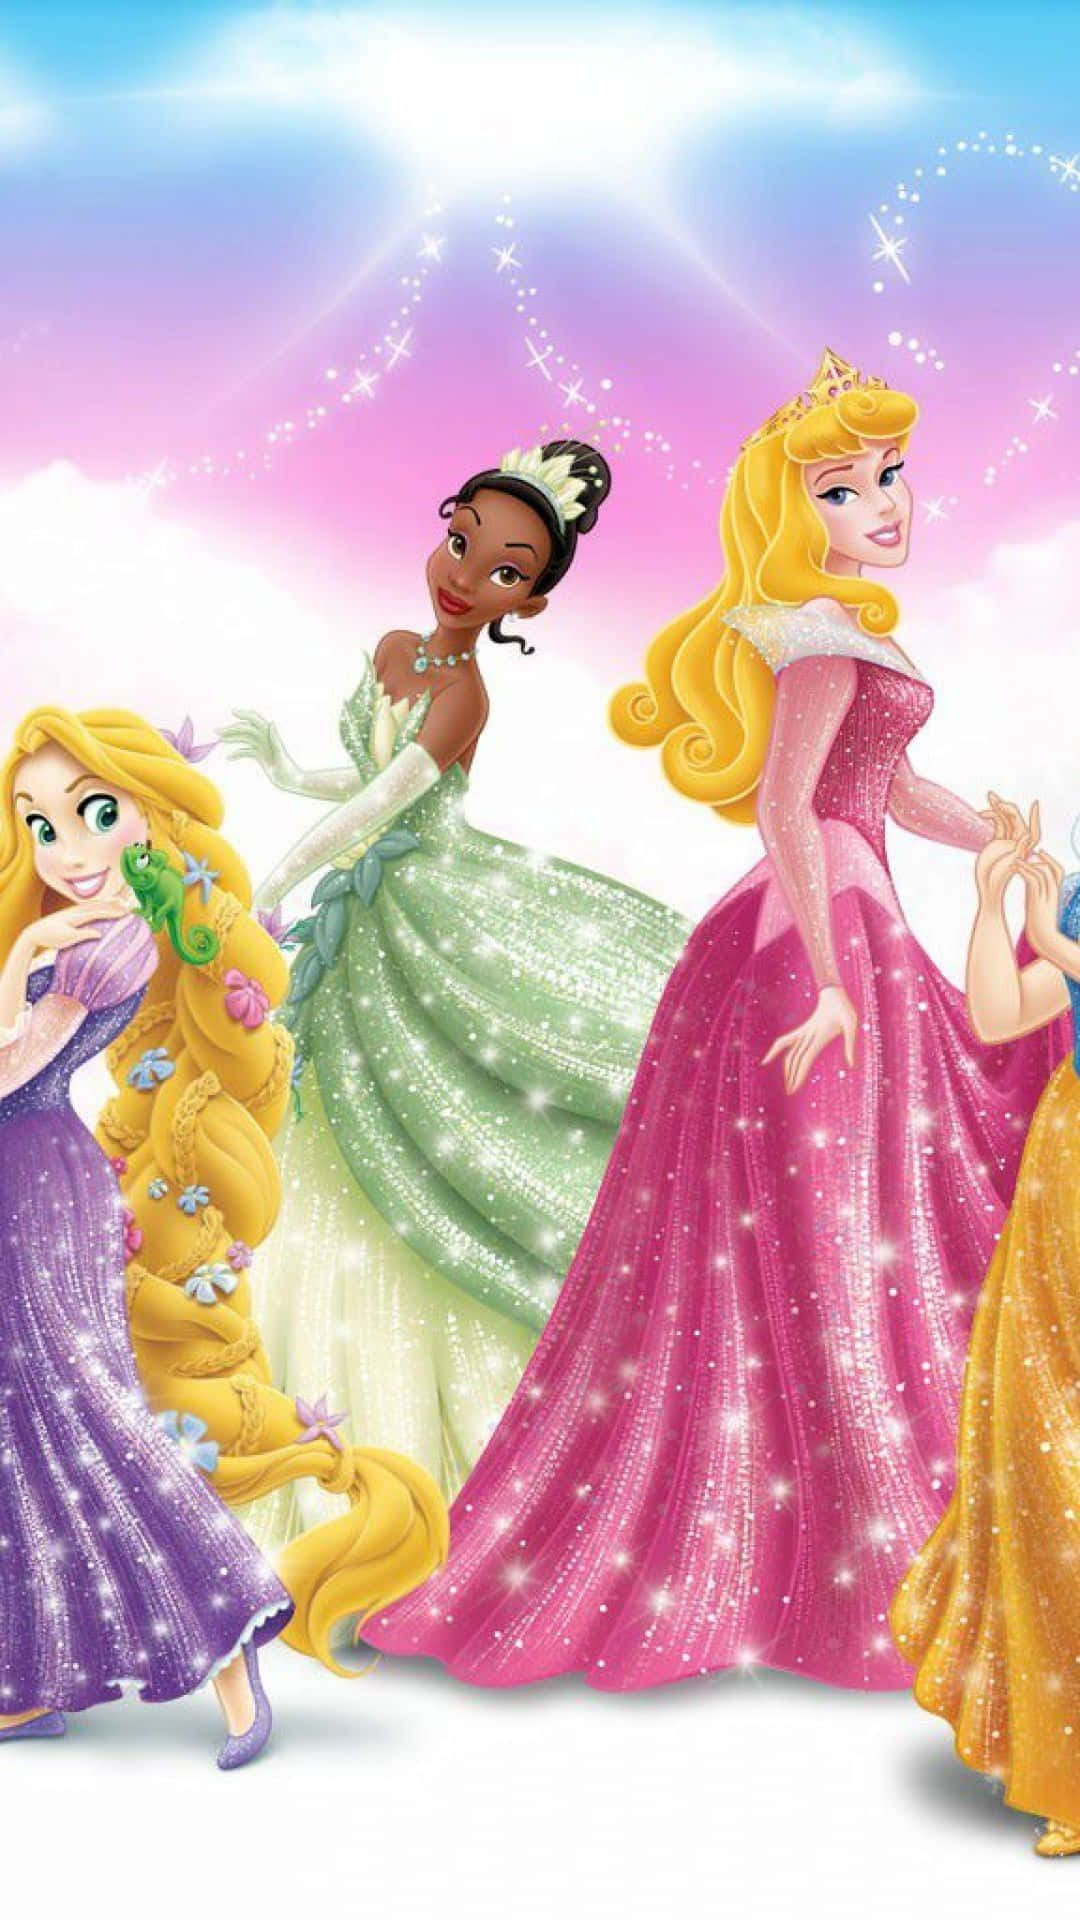 Imagende Princesas De Disney Con Purpurina Mágica